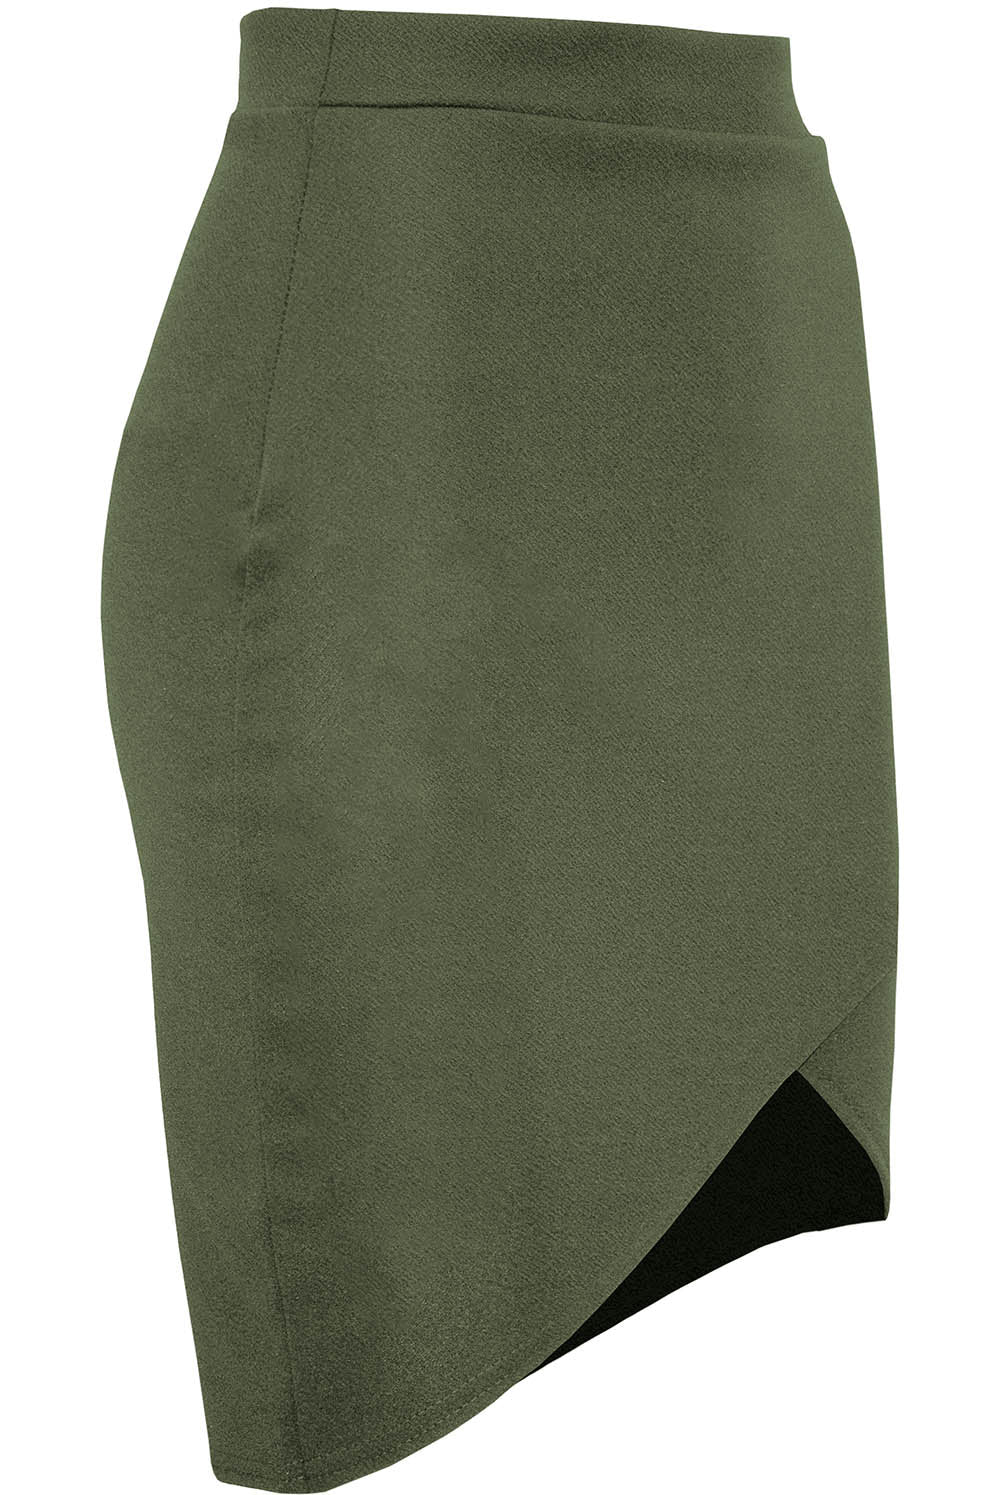 High Waist Asymmetric Black Wrap Mini Skirt - bejealous-com